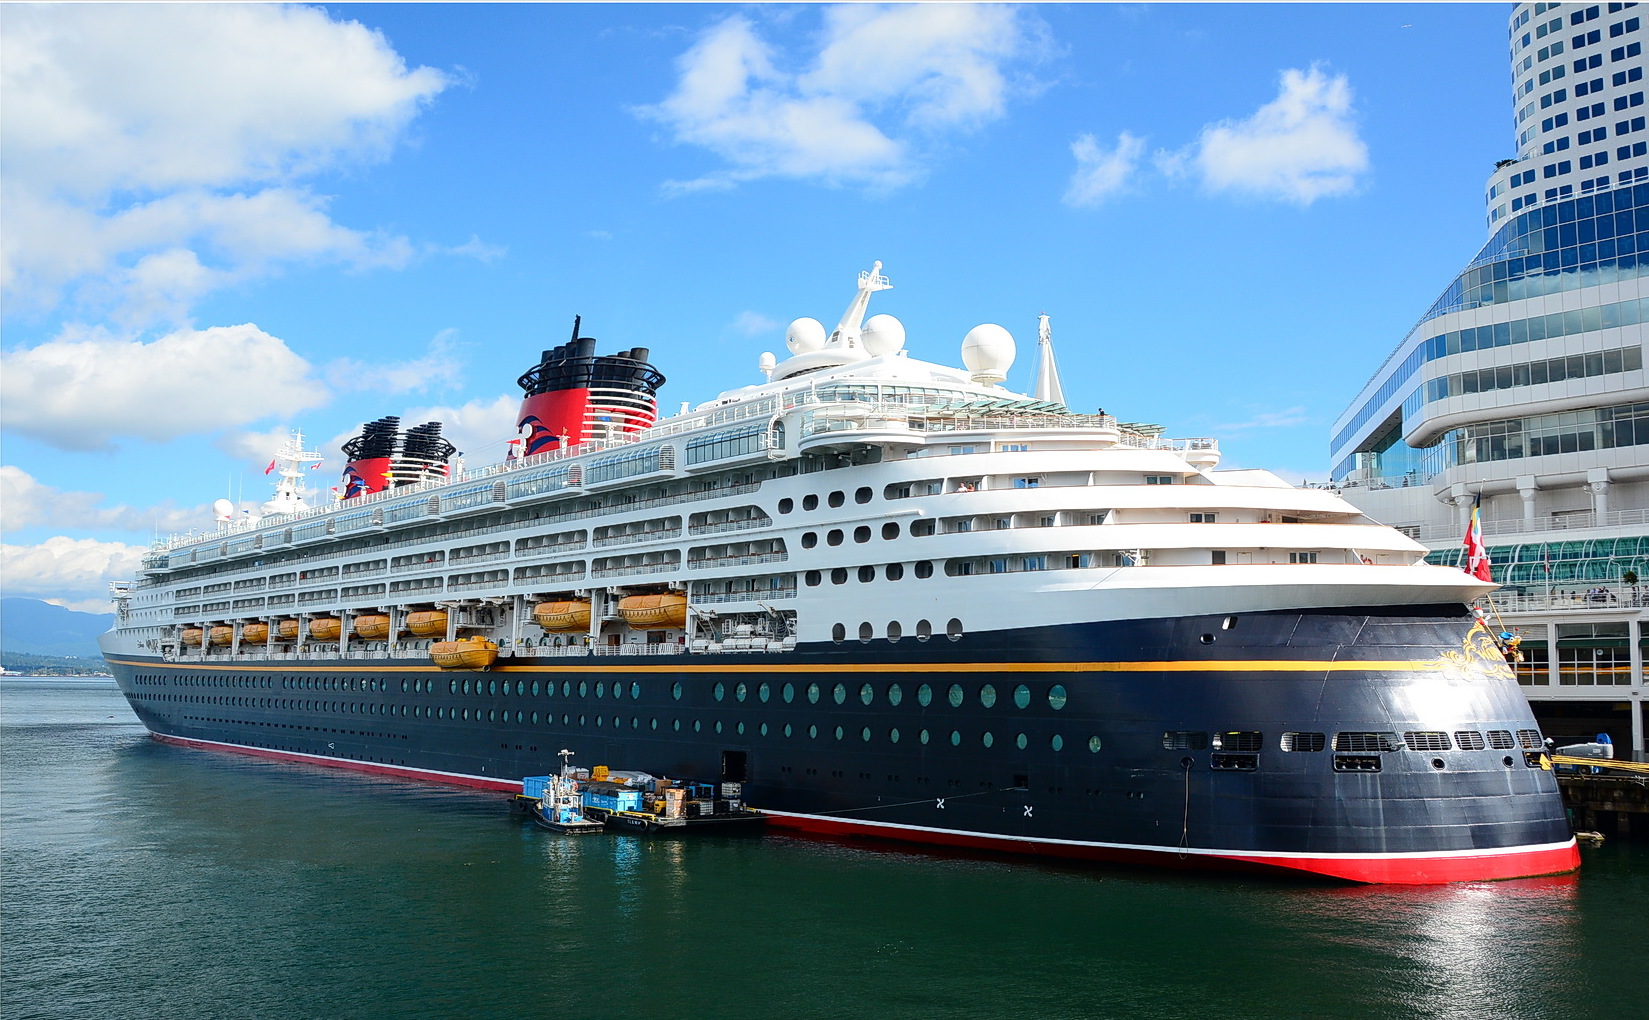 Disney Wonder cruise ship in Vancouver